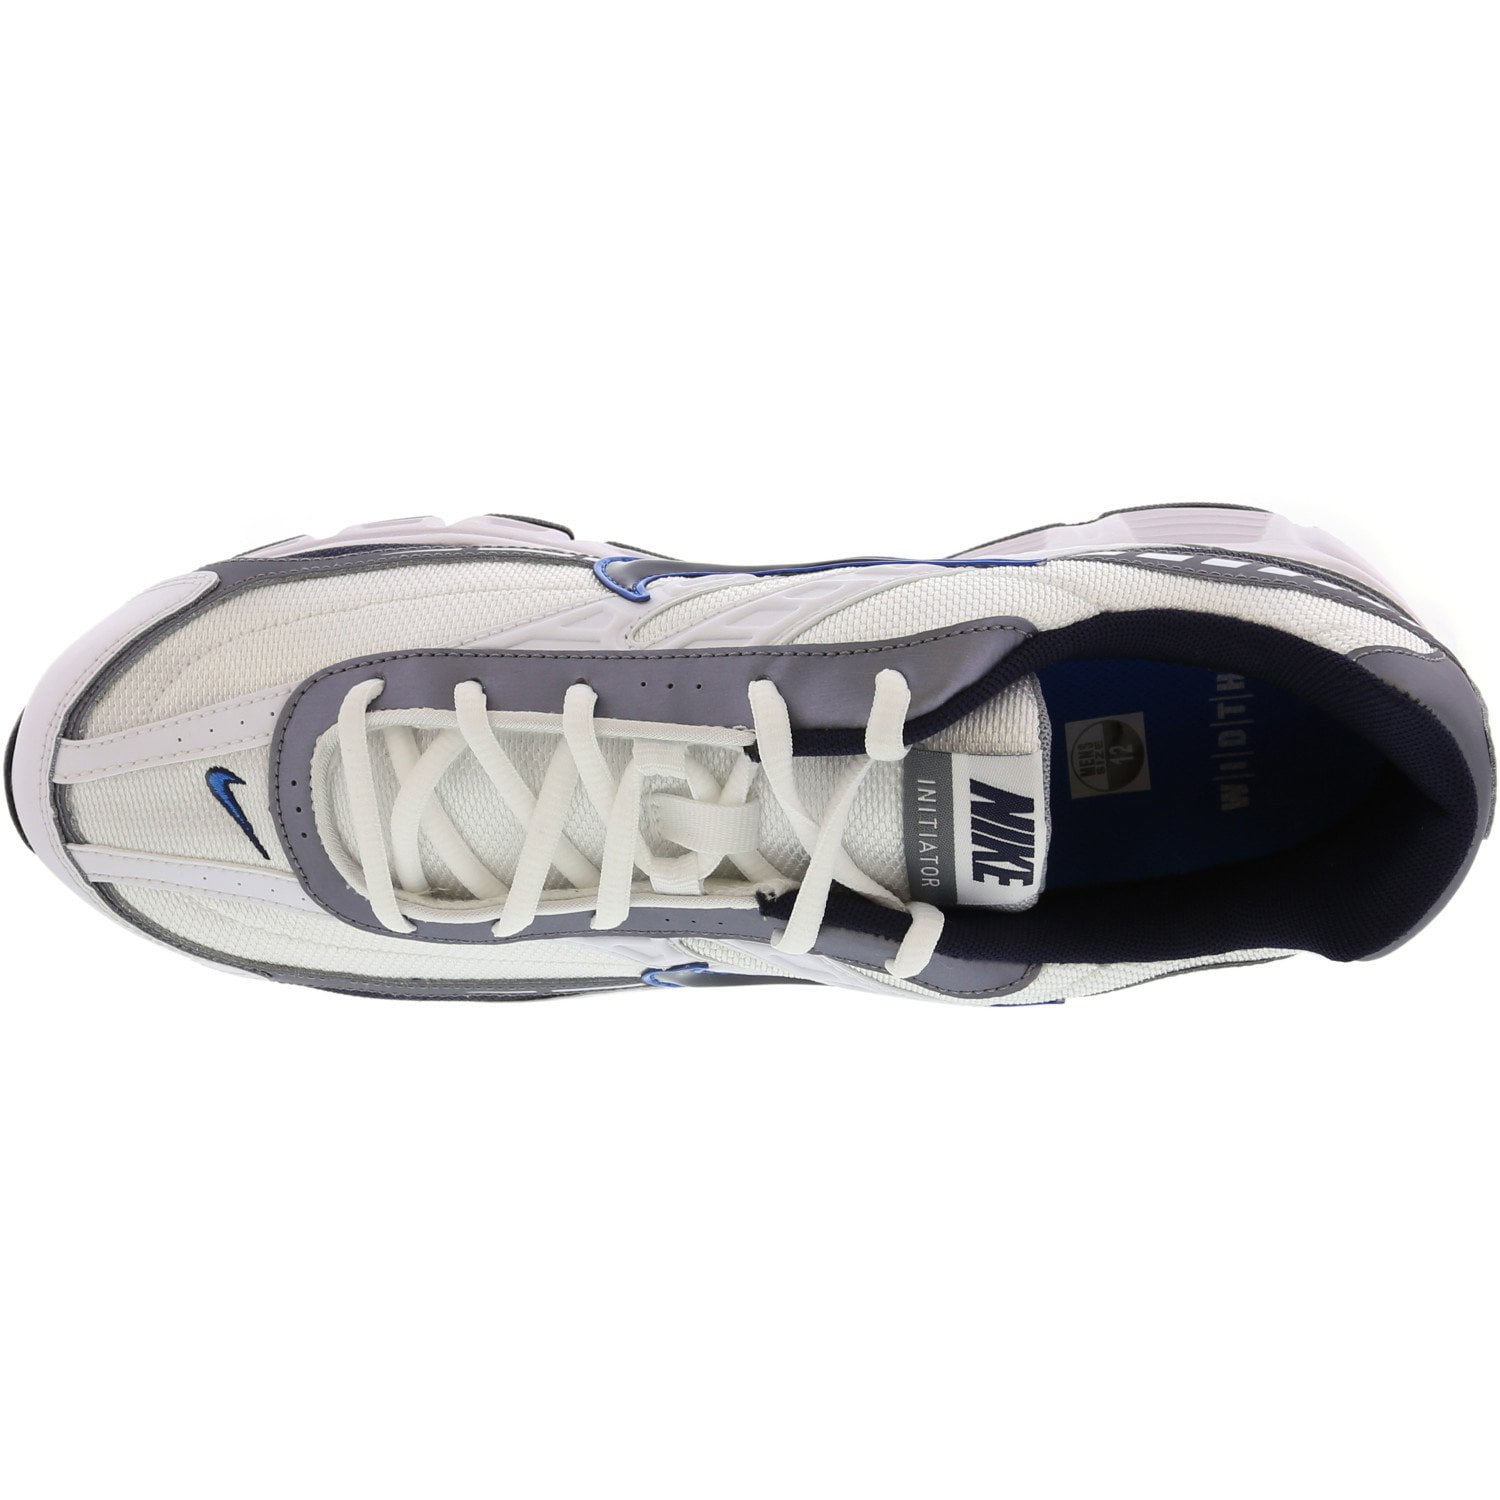 Nike Men's Initiator White / Obsidian - Metallic Cool Running Shoe 12W - Walmart.com